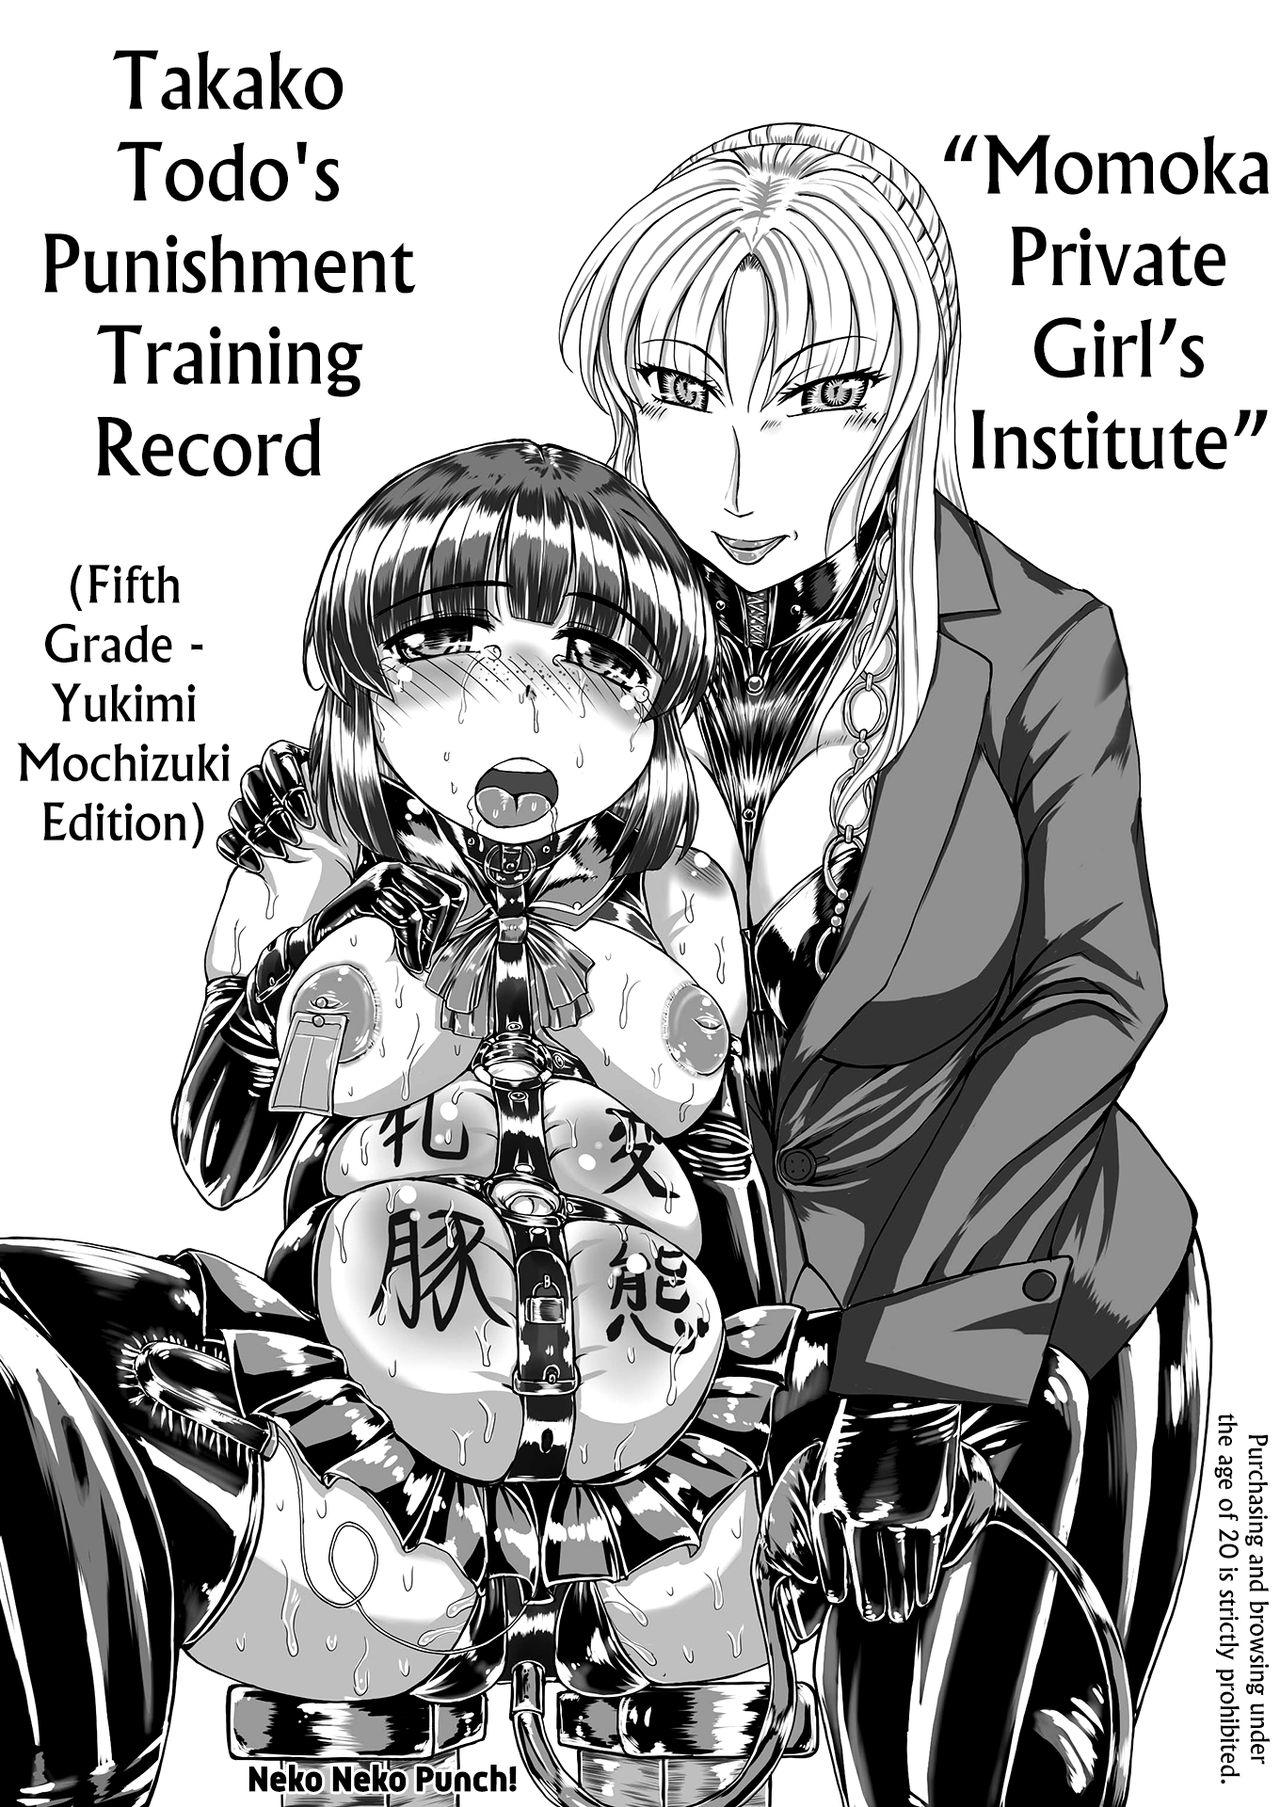 Banho [Neko Neko Panchu!] [Momoka Private Girls Institute] [Takako Todo's Punishment Training Record] (Fifth Grade - Yukimi Mochizuki Edition) [English] Pussy Licking - Picture 1